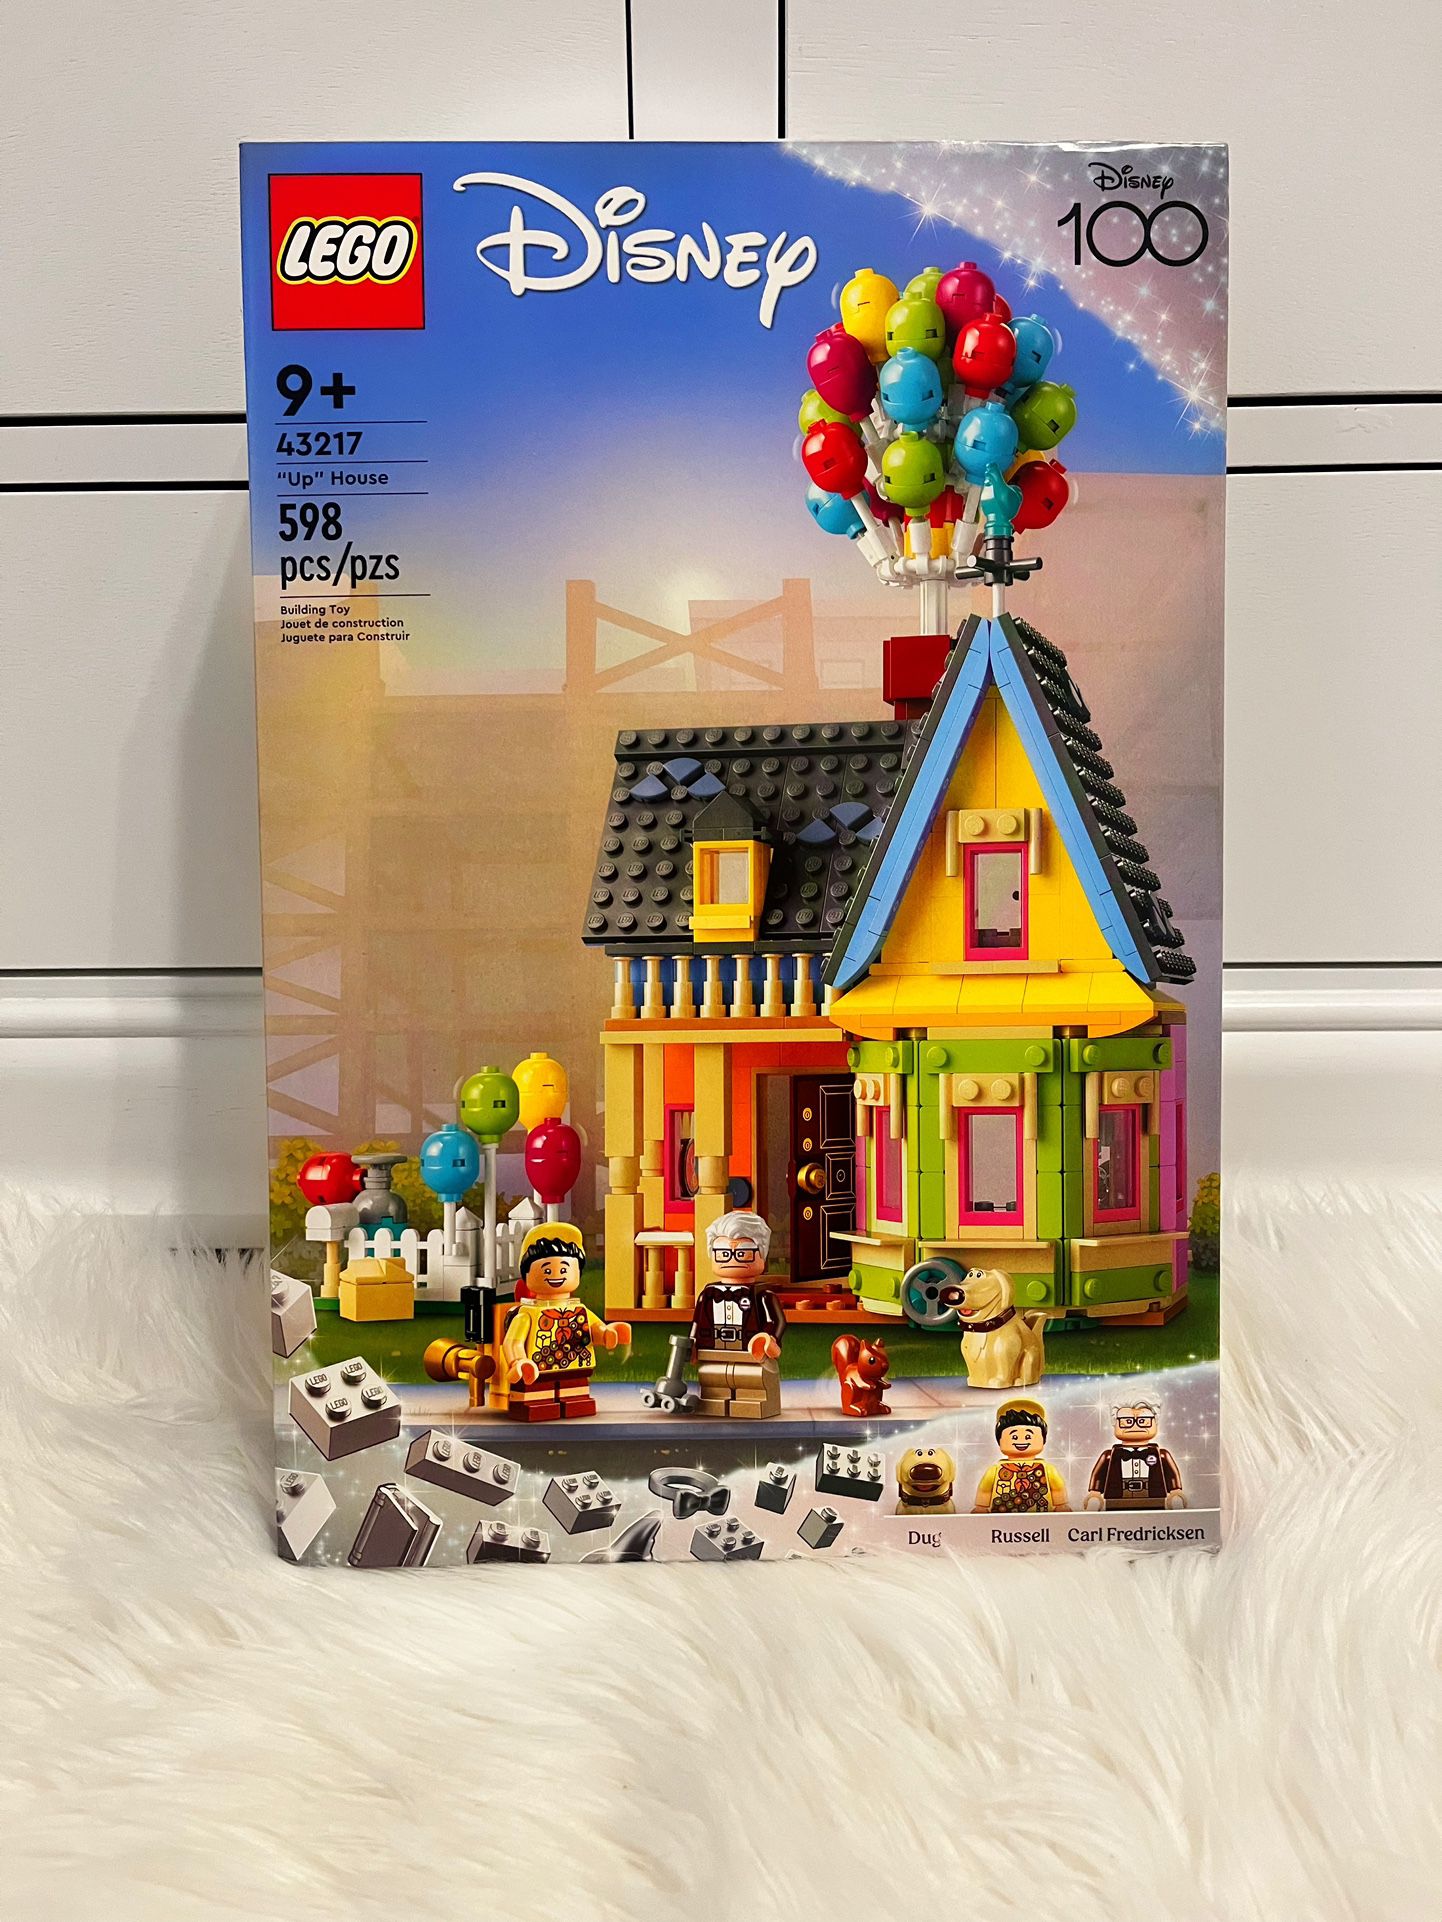 Aktuator Rummelig Rejsende købmand New in Box Lego Disney “Up” House 43217 for Sale in Columbia, MD - OfferUp